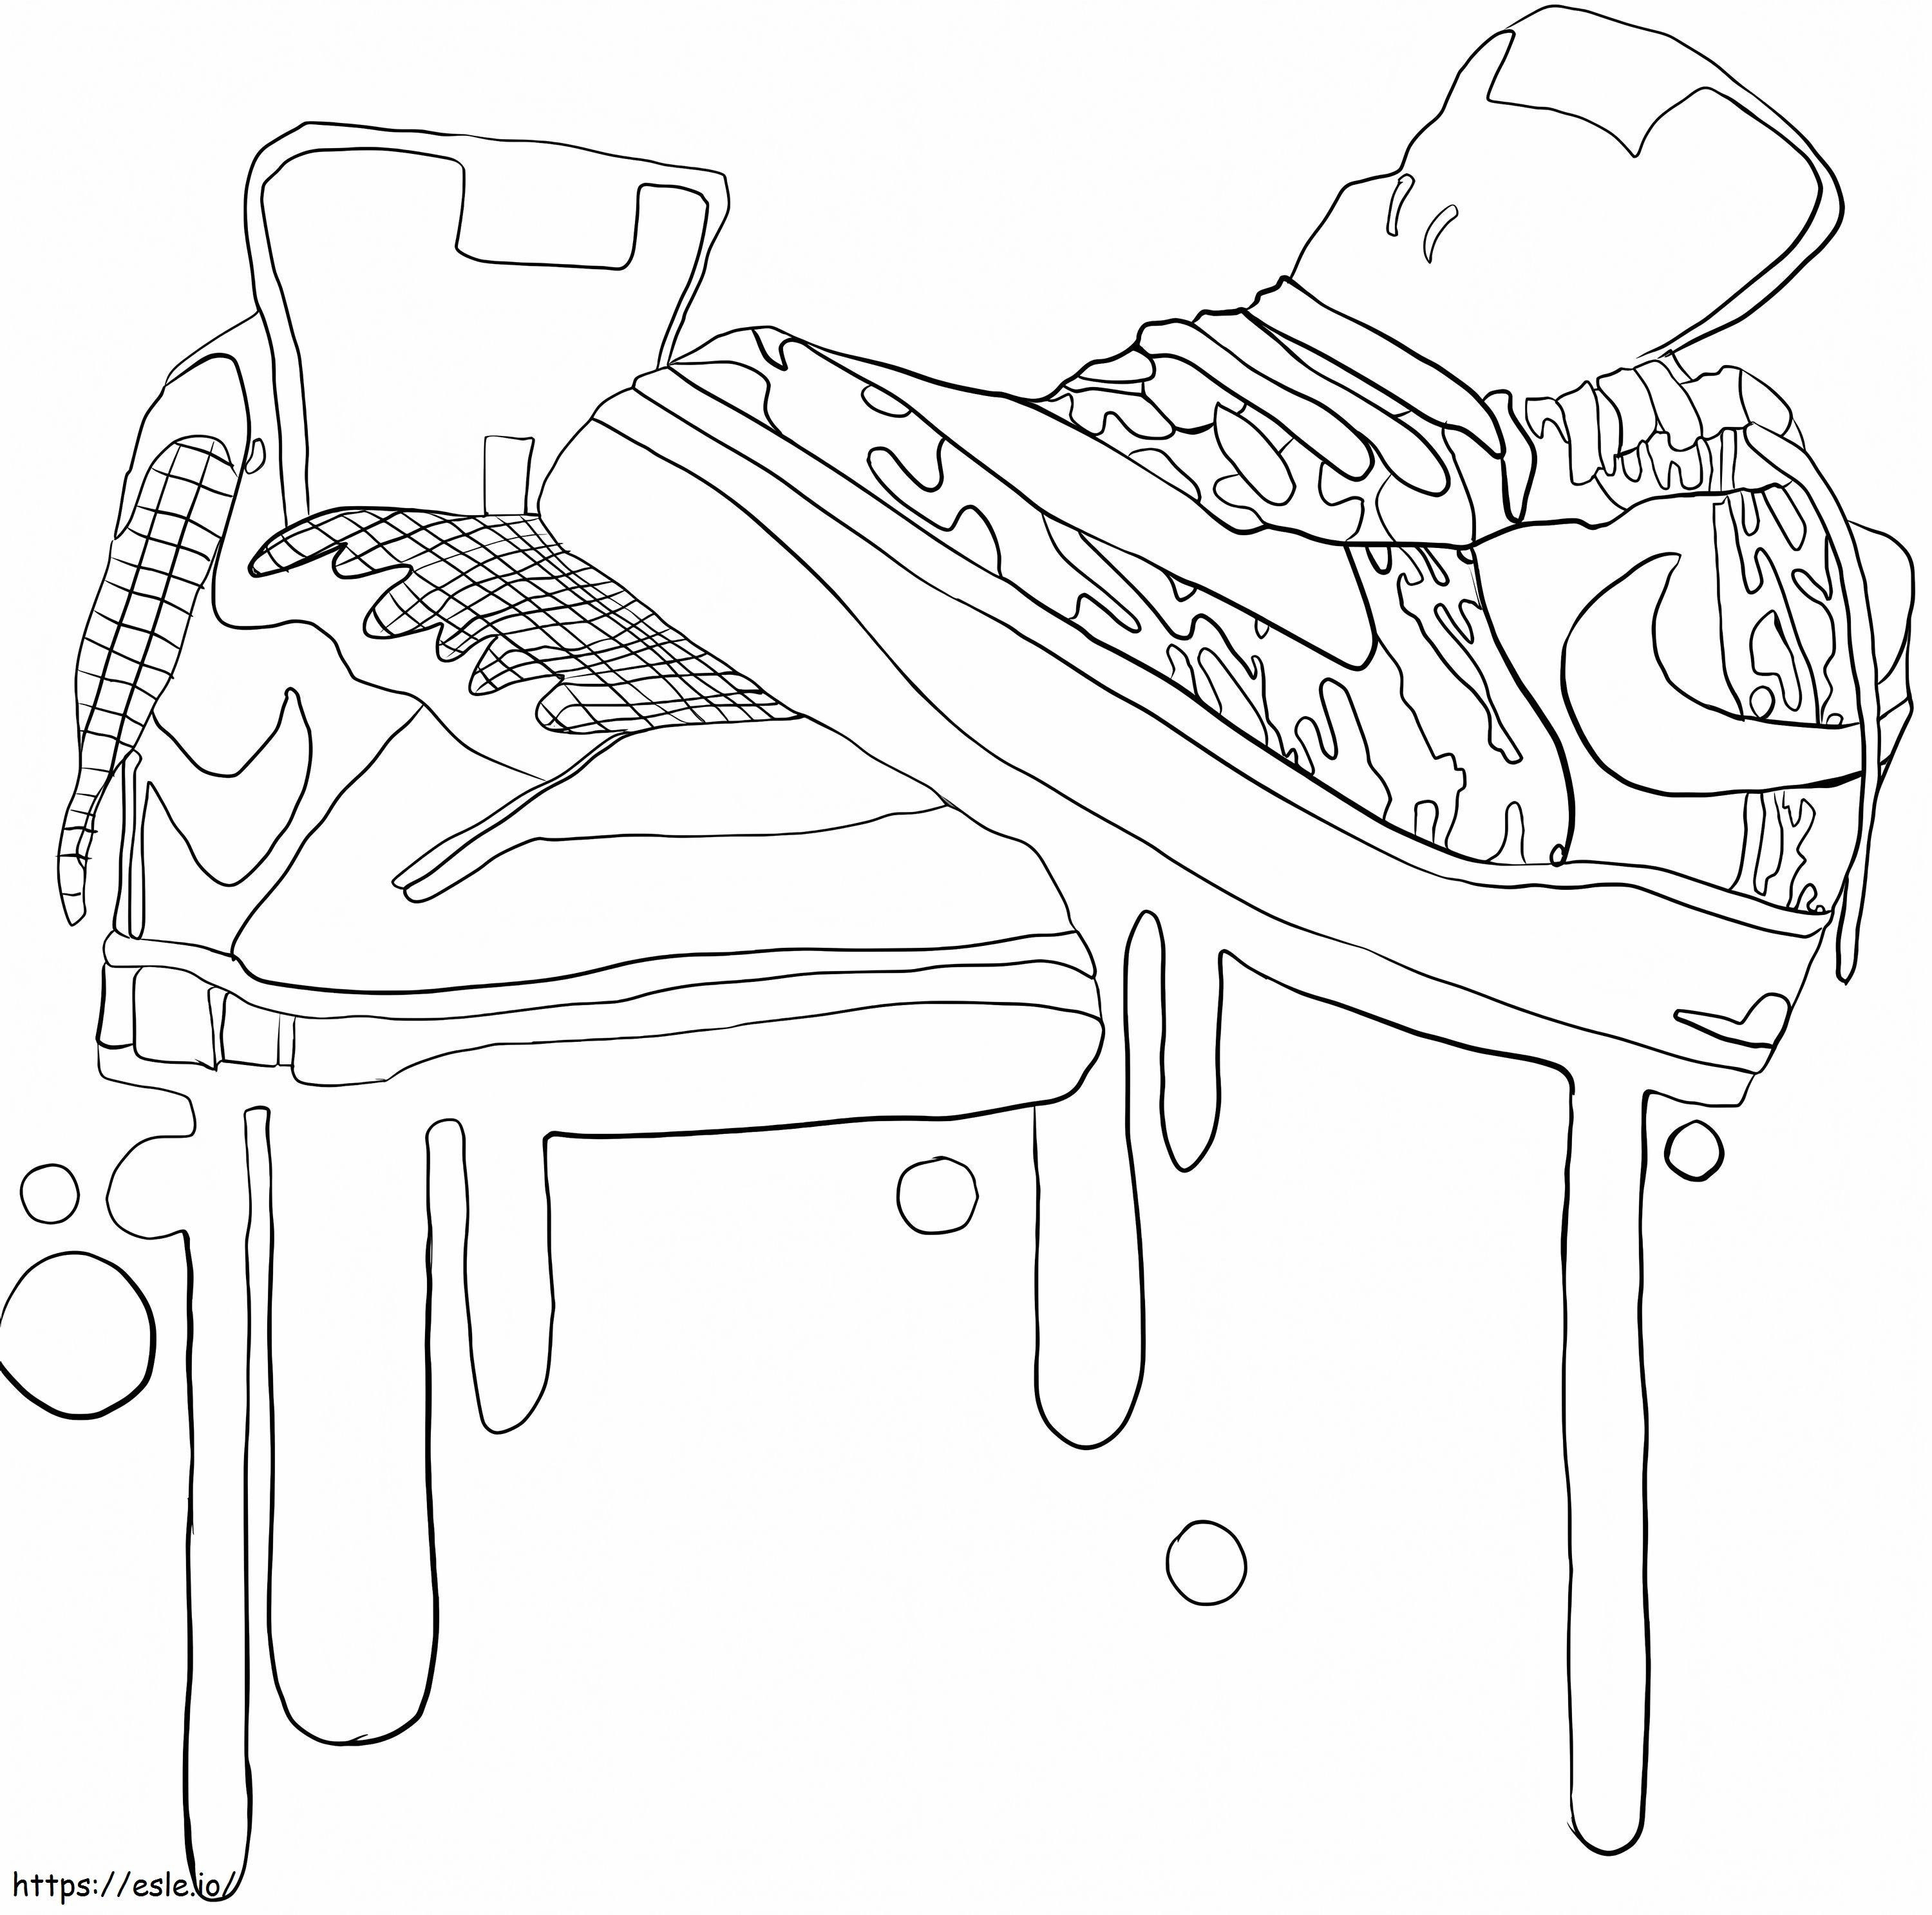 Basic Jordan Shoes coloring page